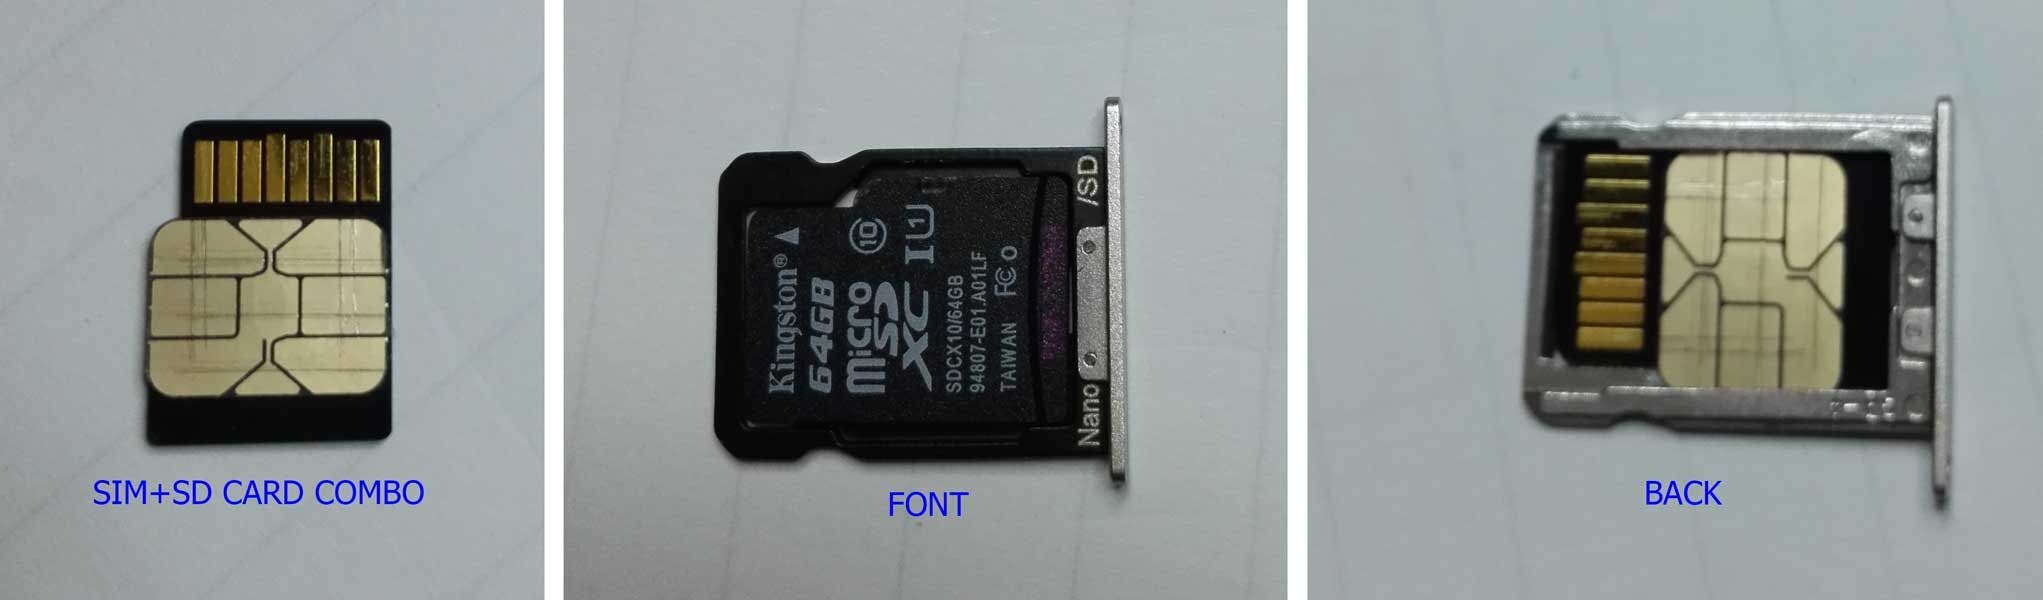 Карта памяти для слота сим карты. SIM 1, SIM 2, MICROSD. Разъем Nano-SIM+MICROSD. MICROSD Micro SIM Combo. Гибридный слот 2 сим карты и карта памяти.